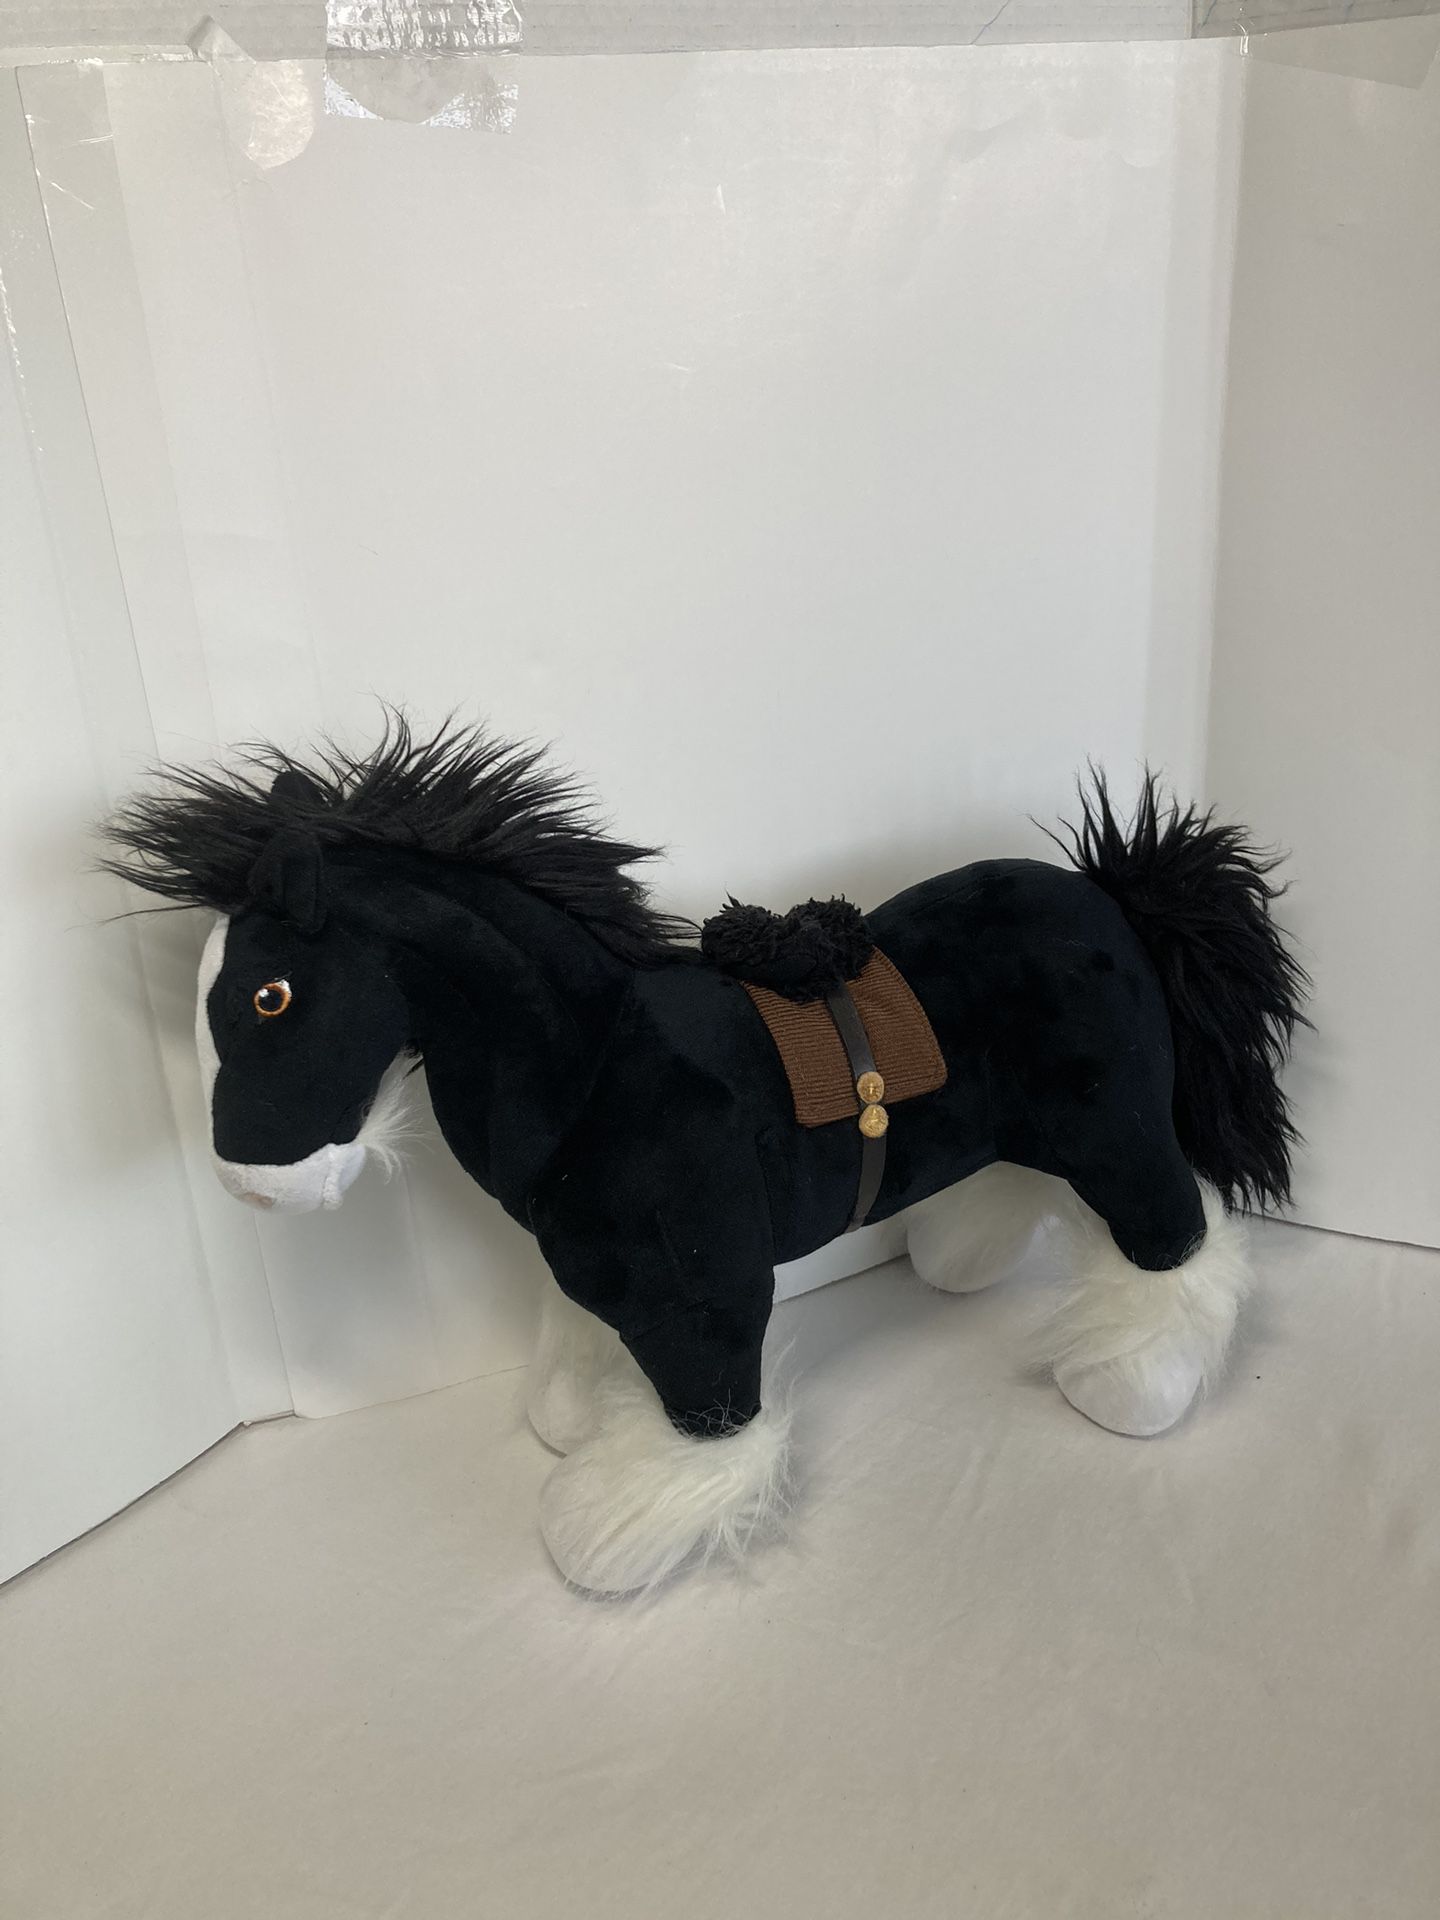 Disney Store Exclusive Brave Angus Black horse Plush Stuffed Animal 14” x 17